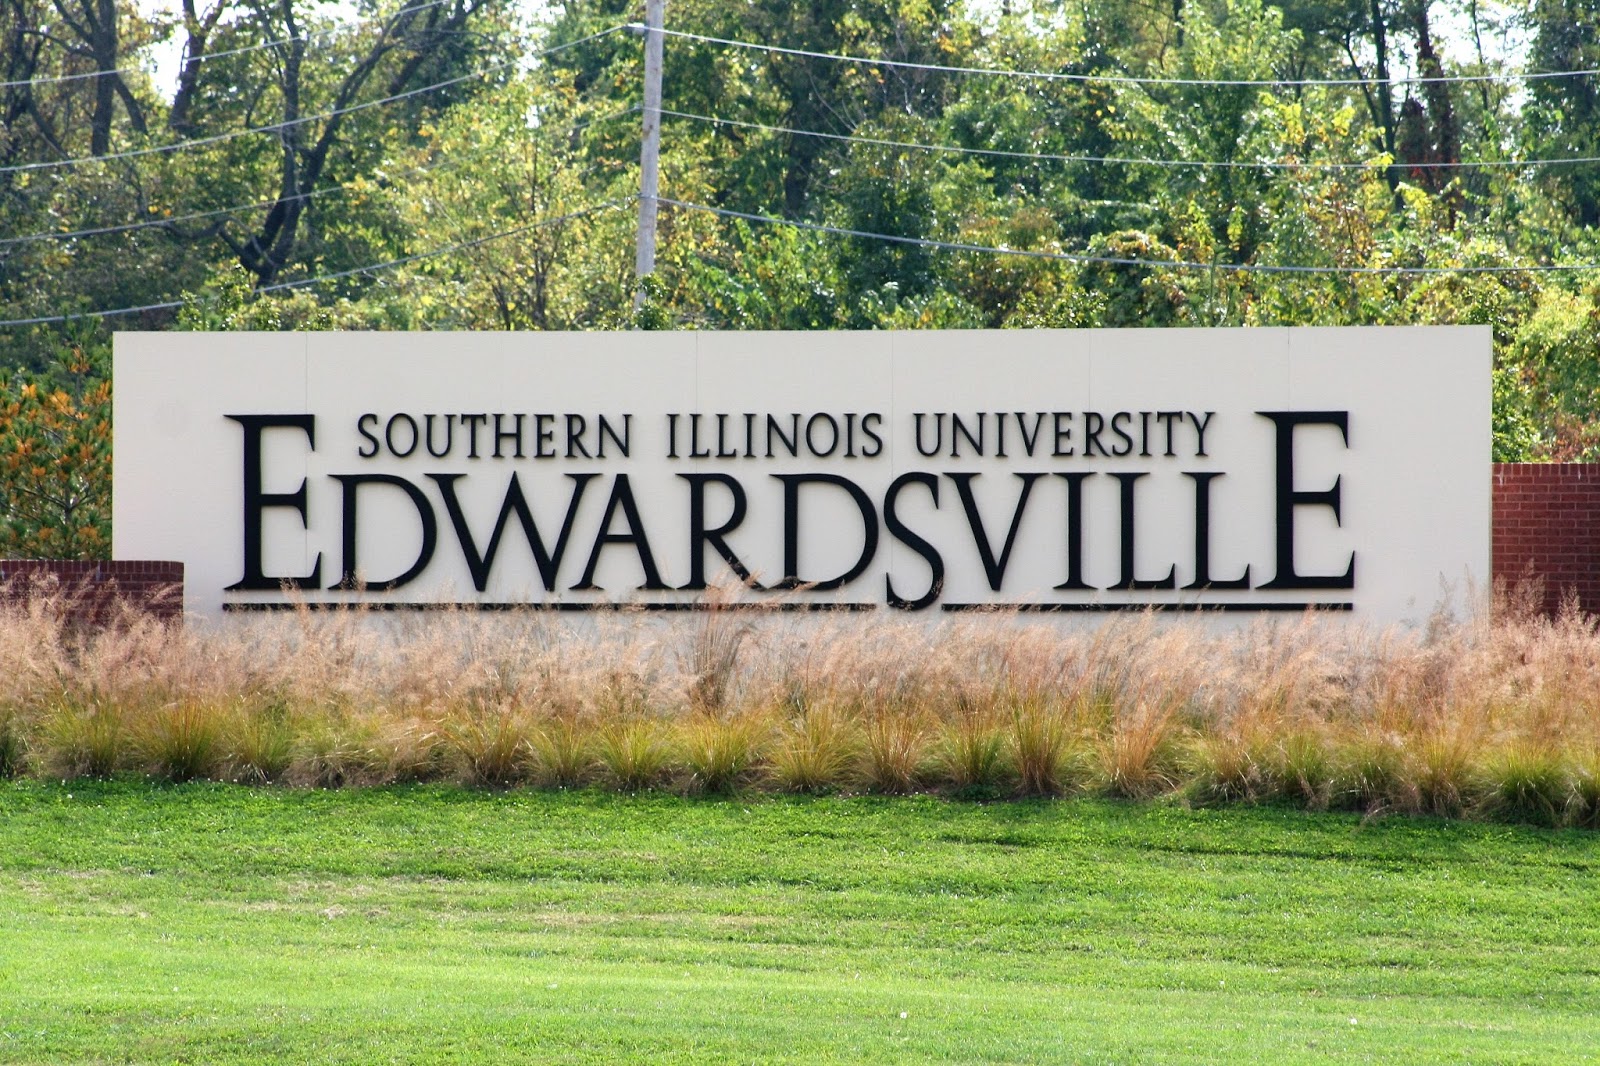 DU học Mỹ 2019 cùng Southern Illinois University